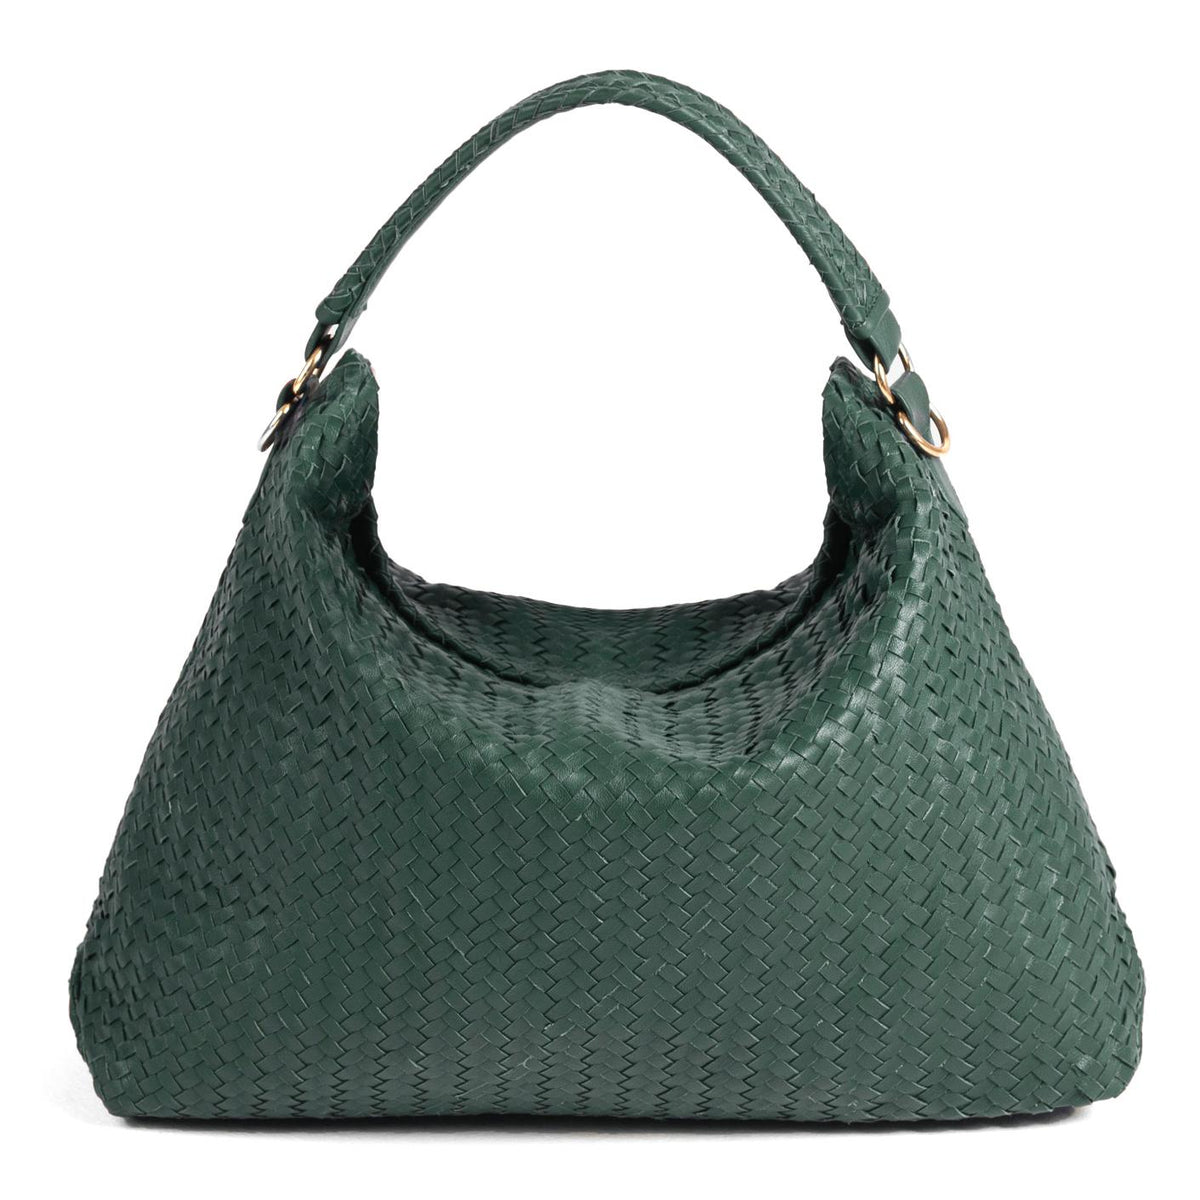 Handmade Woven Original Green Leather Bag